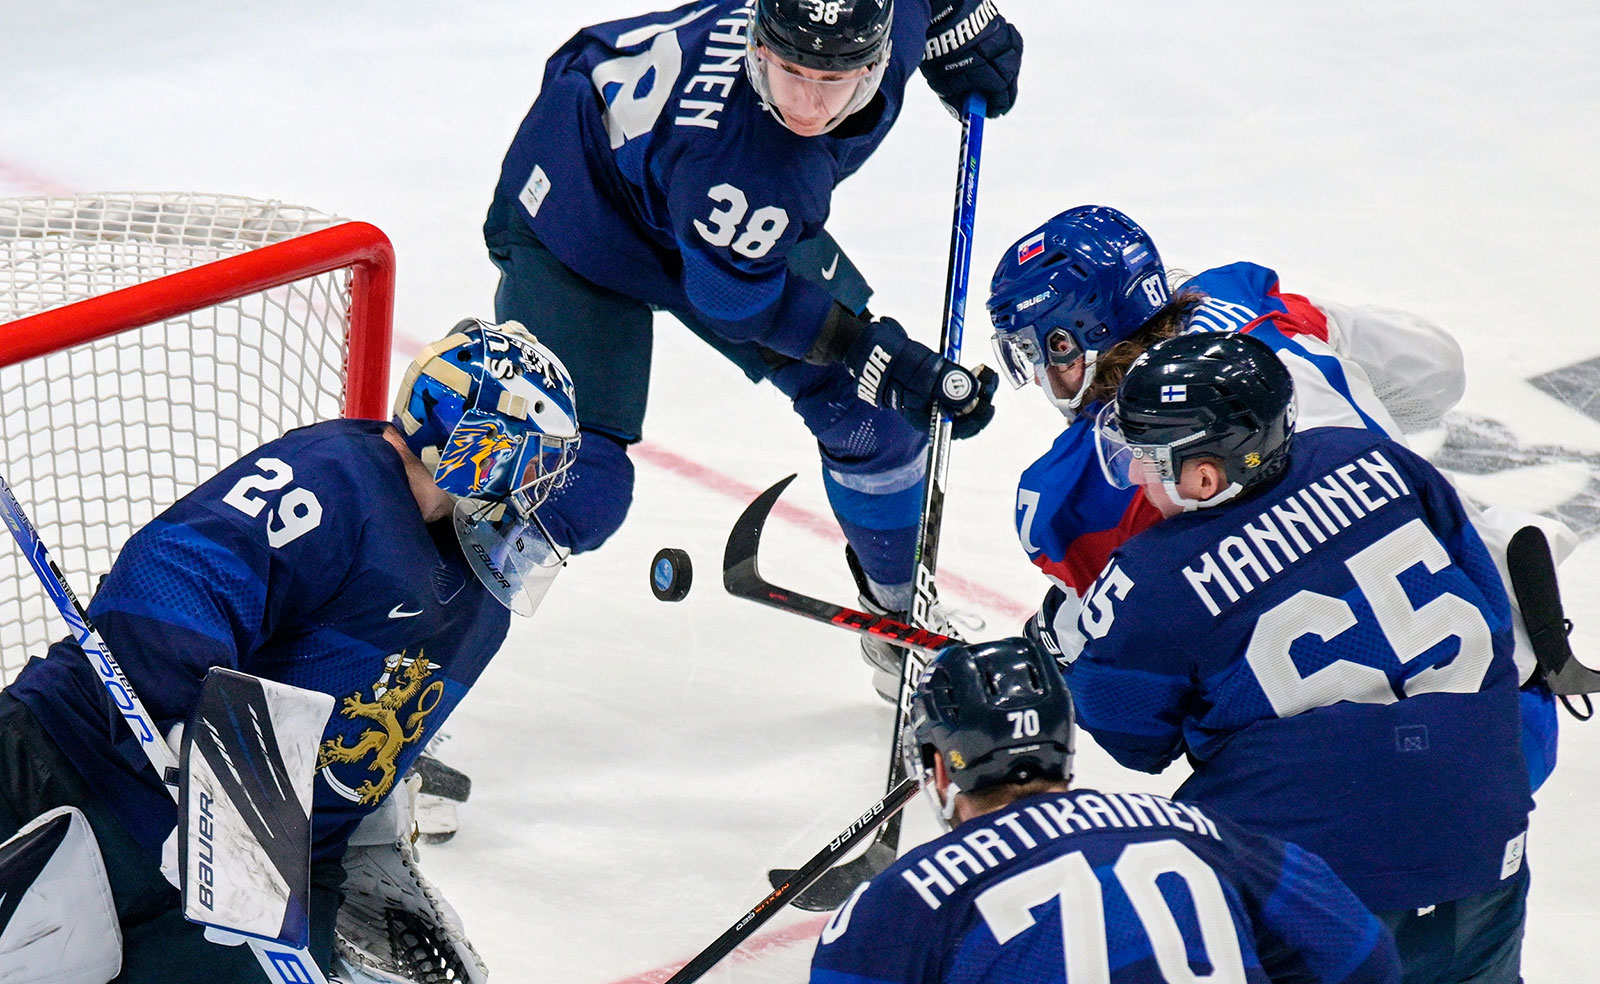 Finnish goalie Harri Säteri defends his net during a hockey semifinal against Slovakia on February 18. Finland won 2-0.